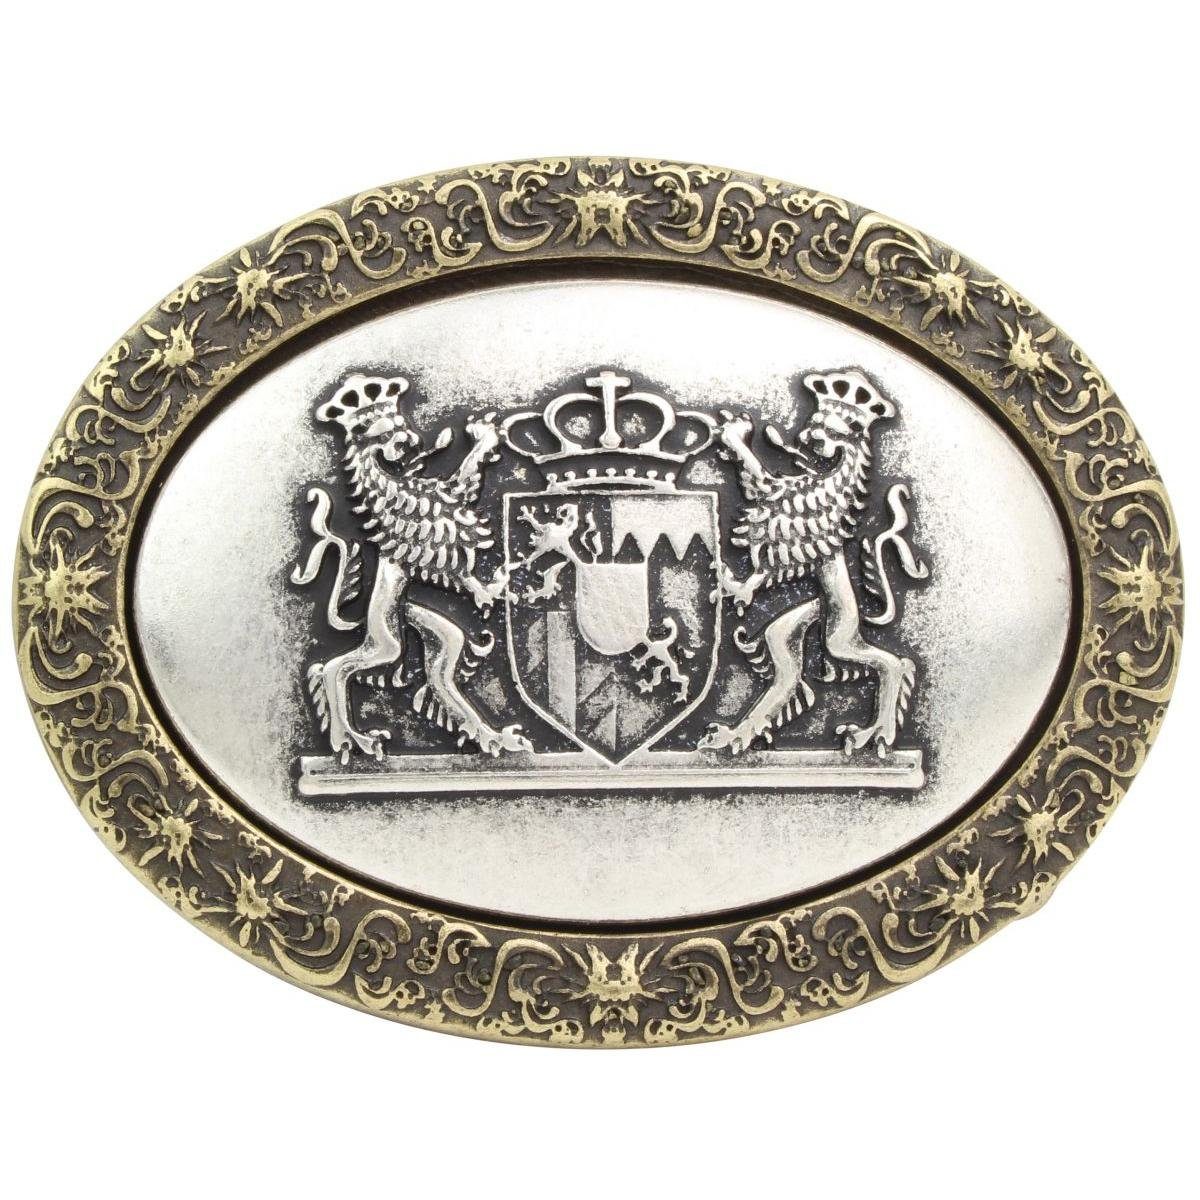 BELTINGER Gürtelschnalle Wappen Bayern 4,0 cm - Buckle Wechselschließe Gürtelschließe 40mm - Fü bicolor g/s